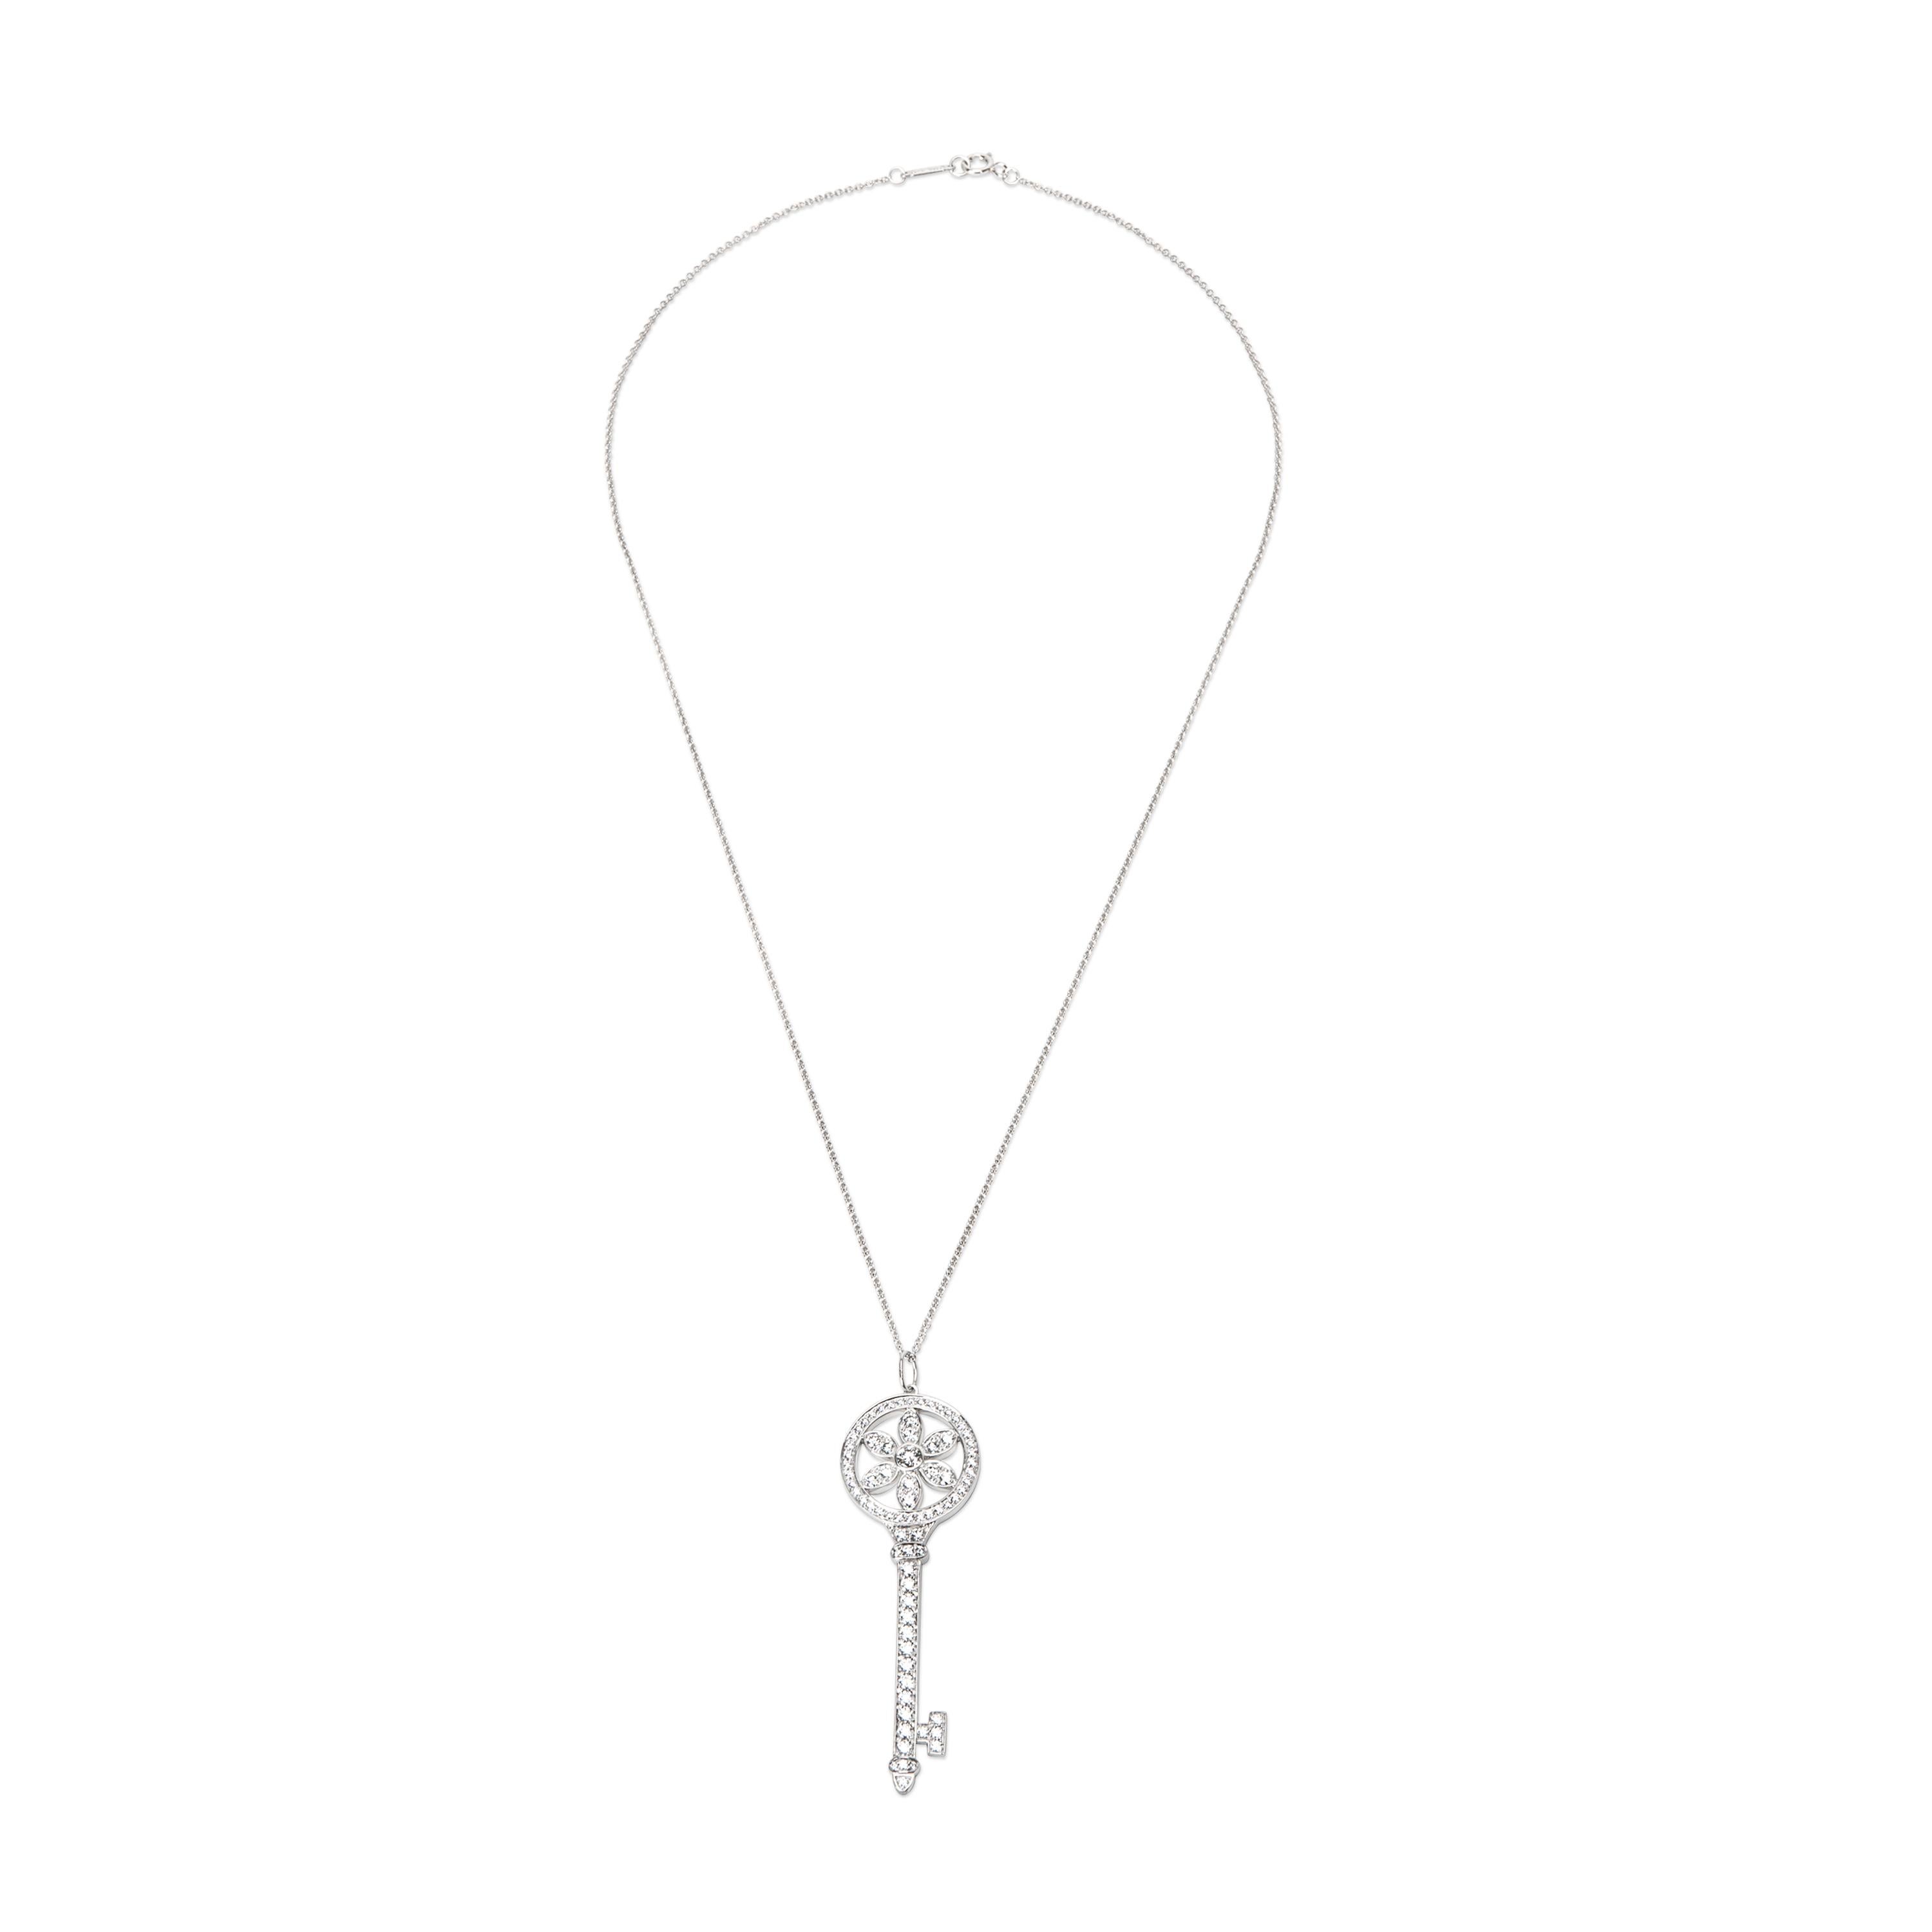 Round Cut Tiffany & Co. Daisy Key Necklace in Platinum 0.99 Carat